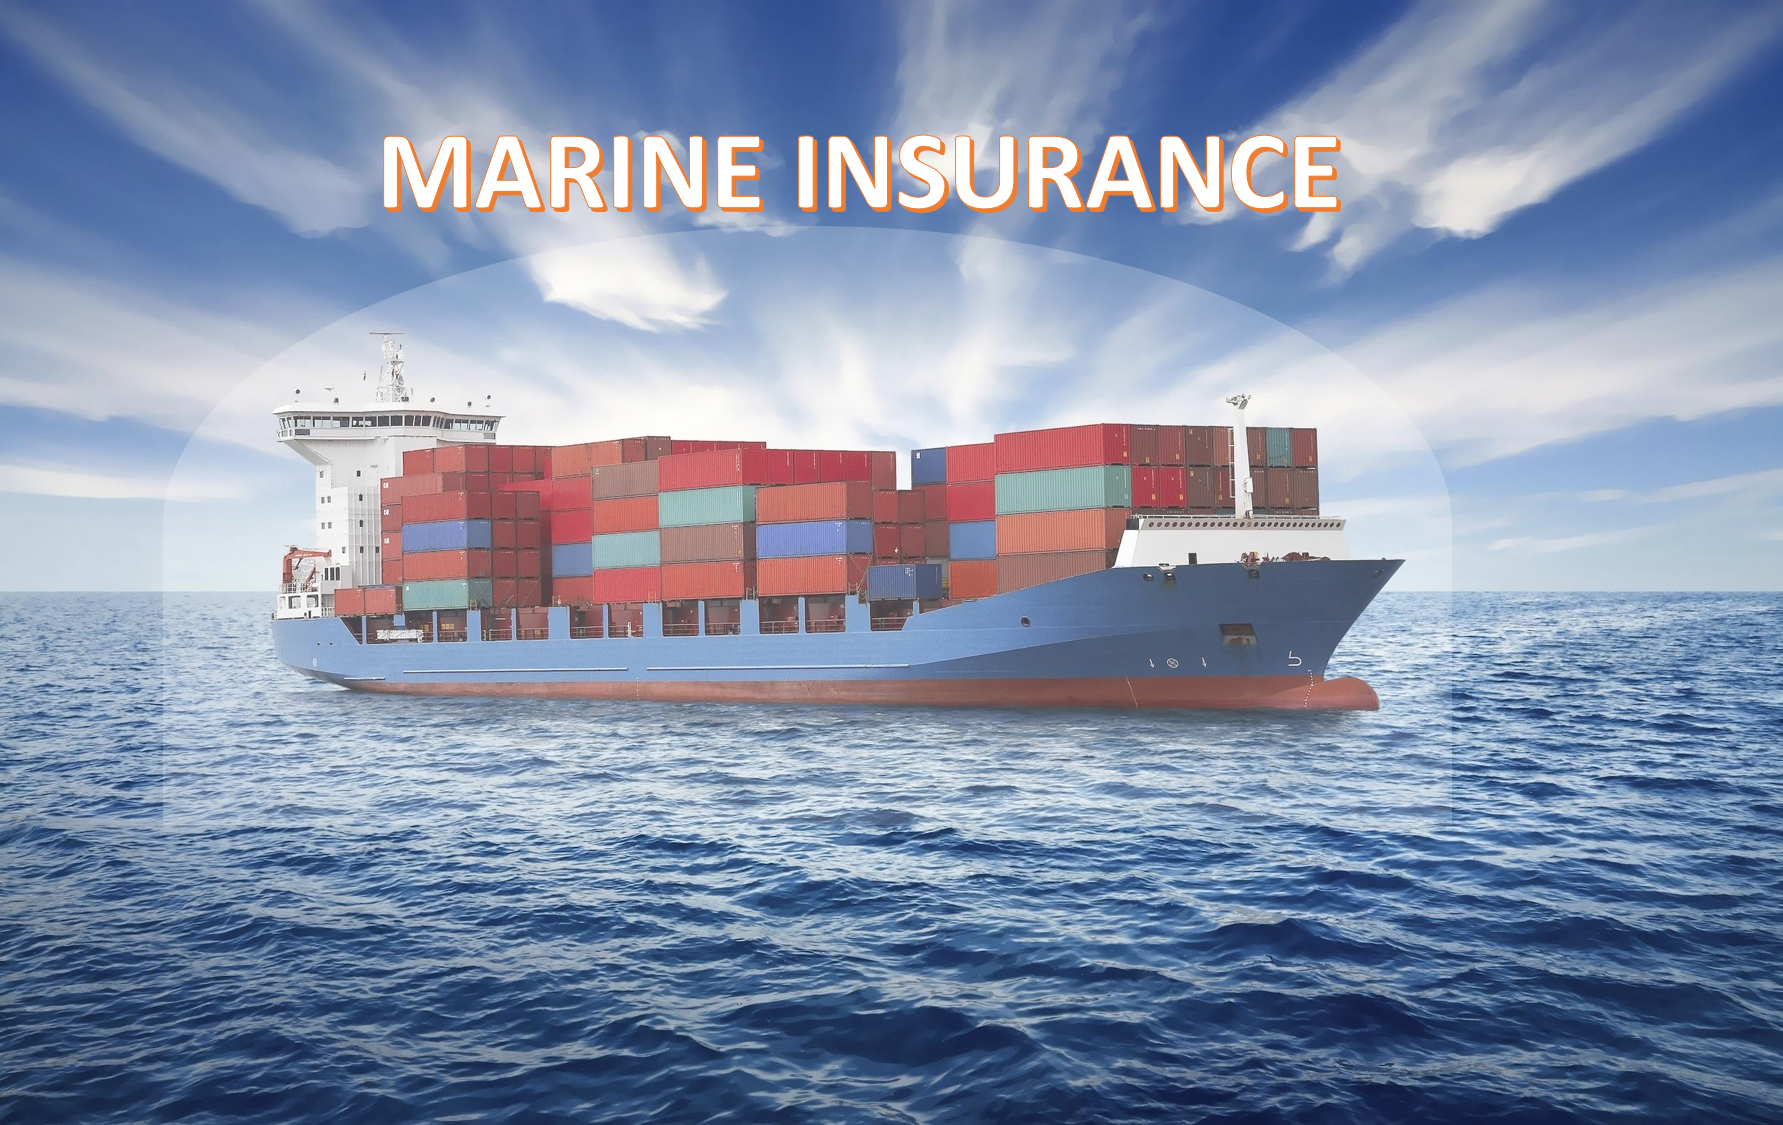 MARINE INSURANCE, Maritime perils, Marine adventure